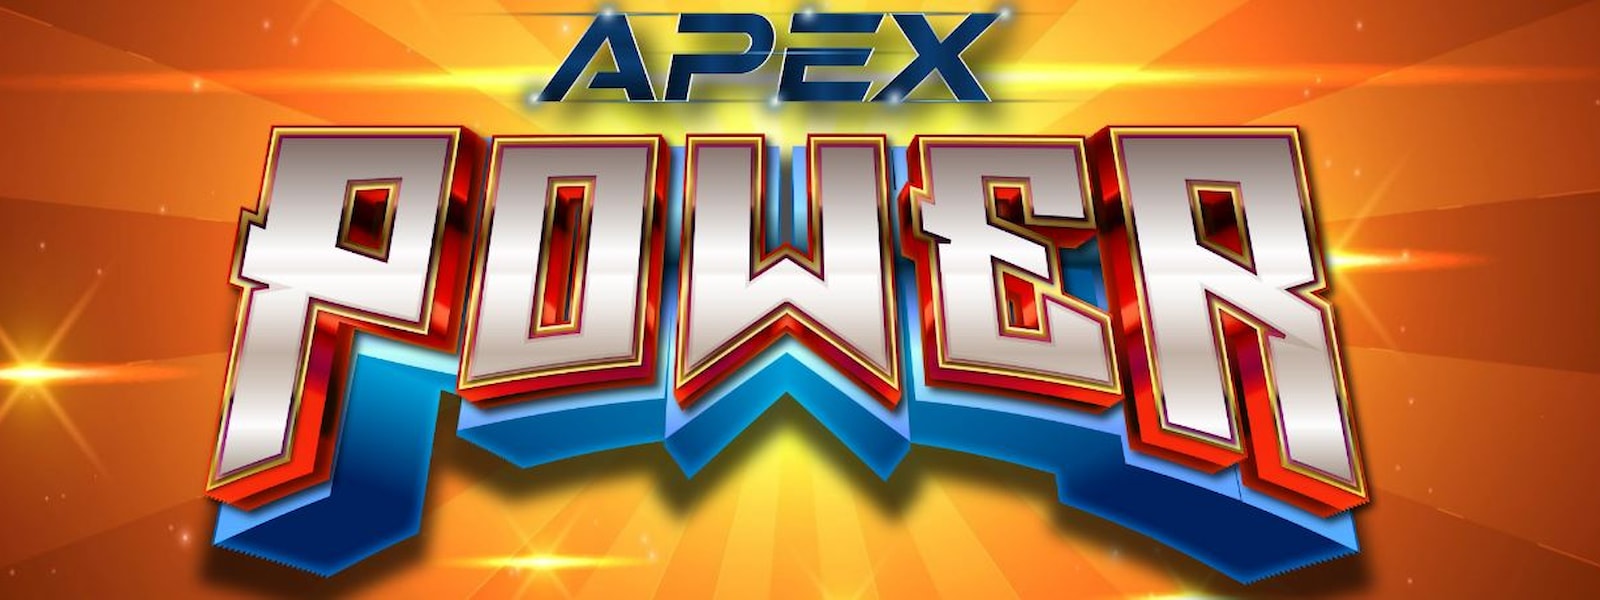 Apex power logo